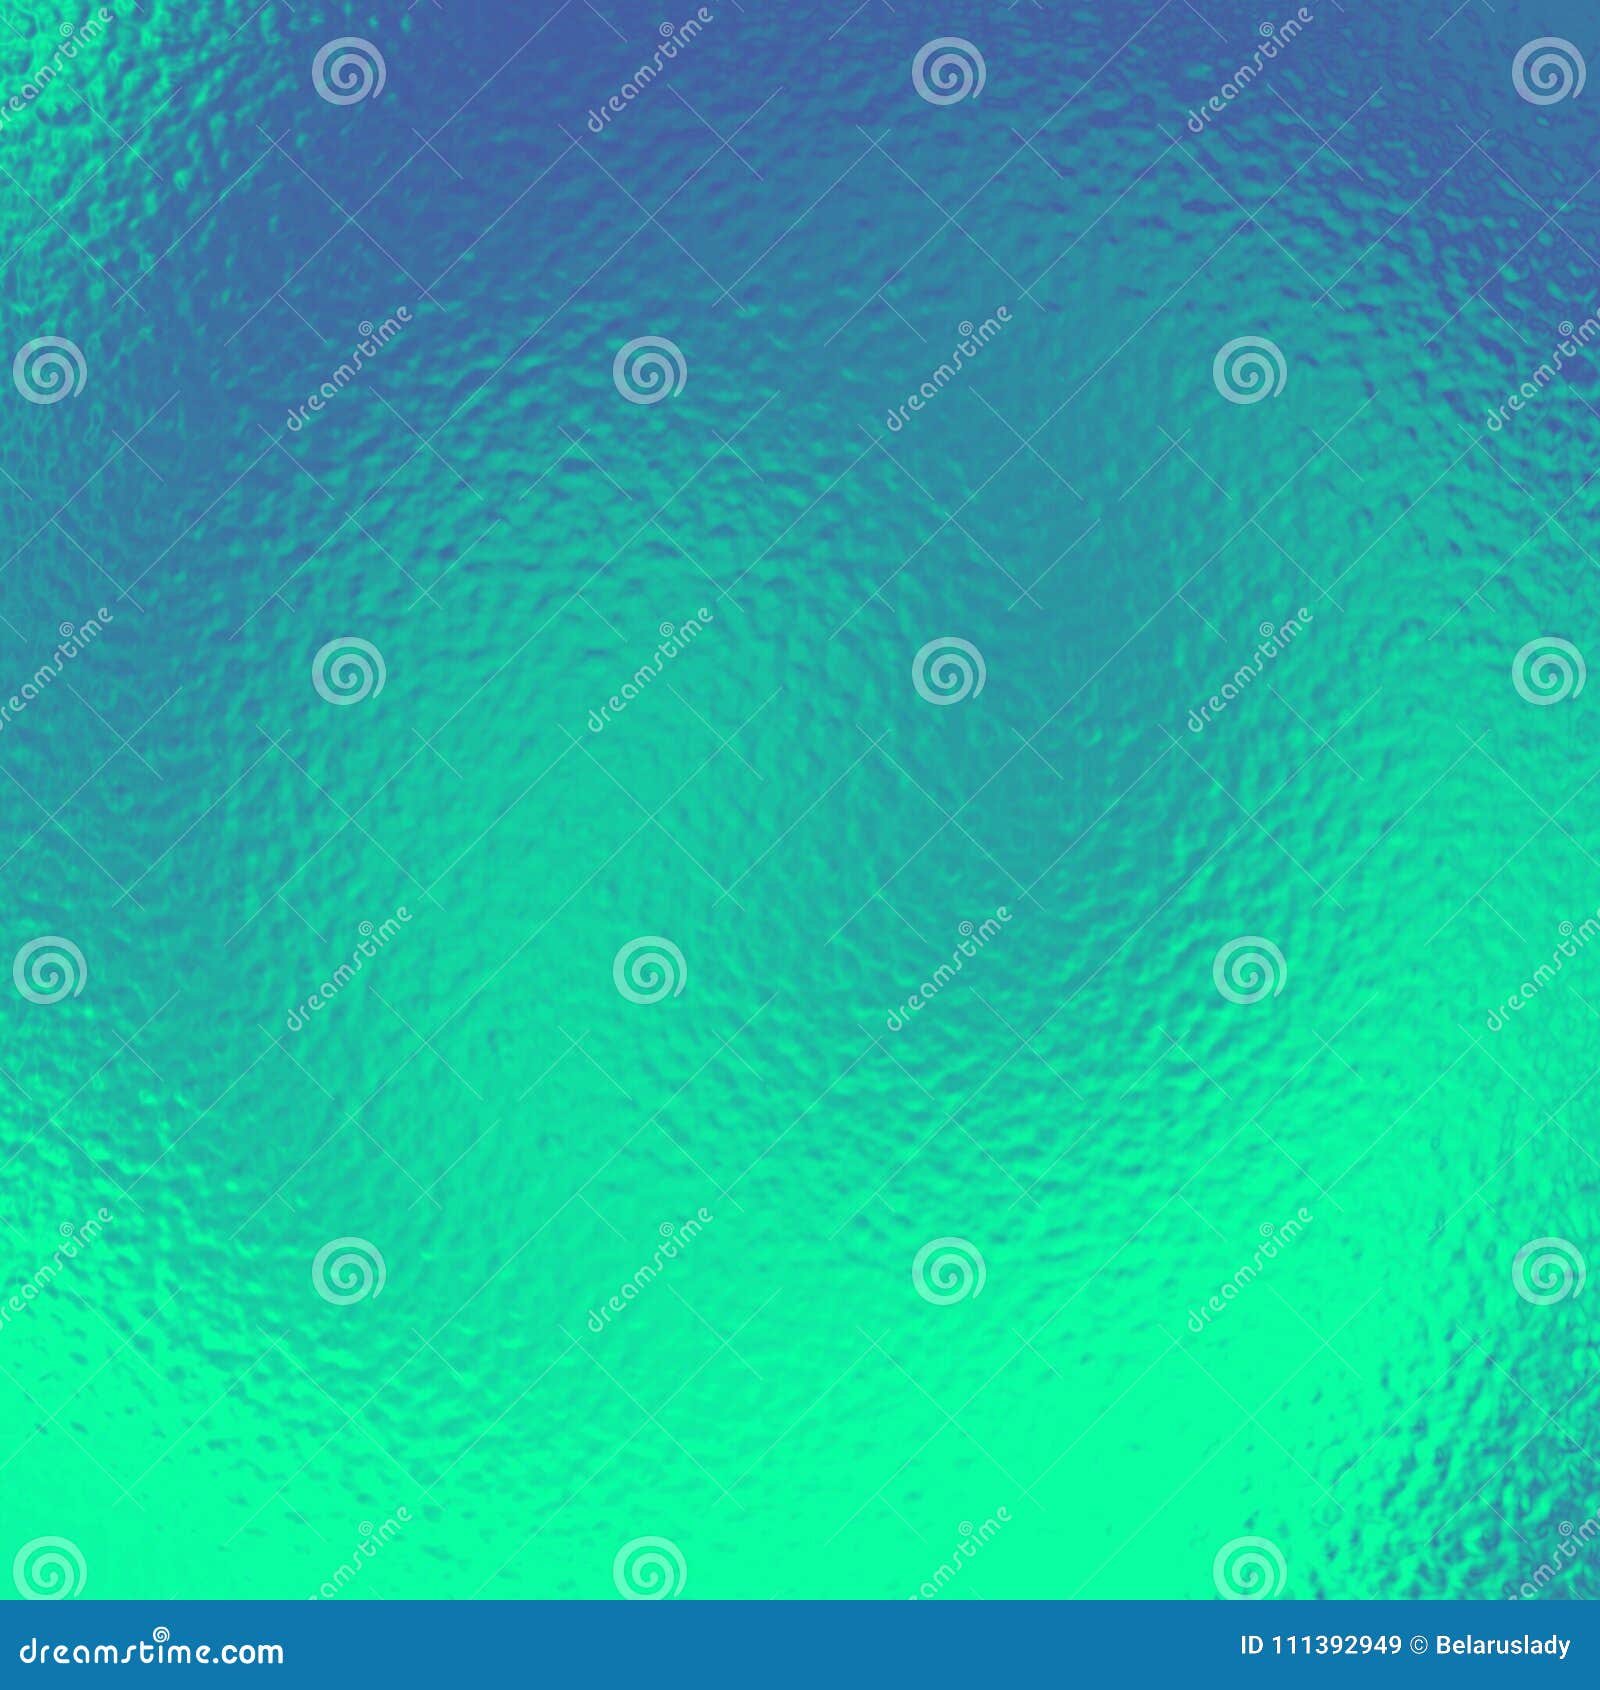 teal gradient effect freez texture background